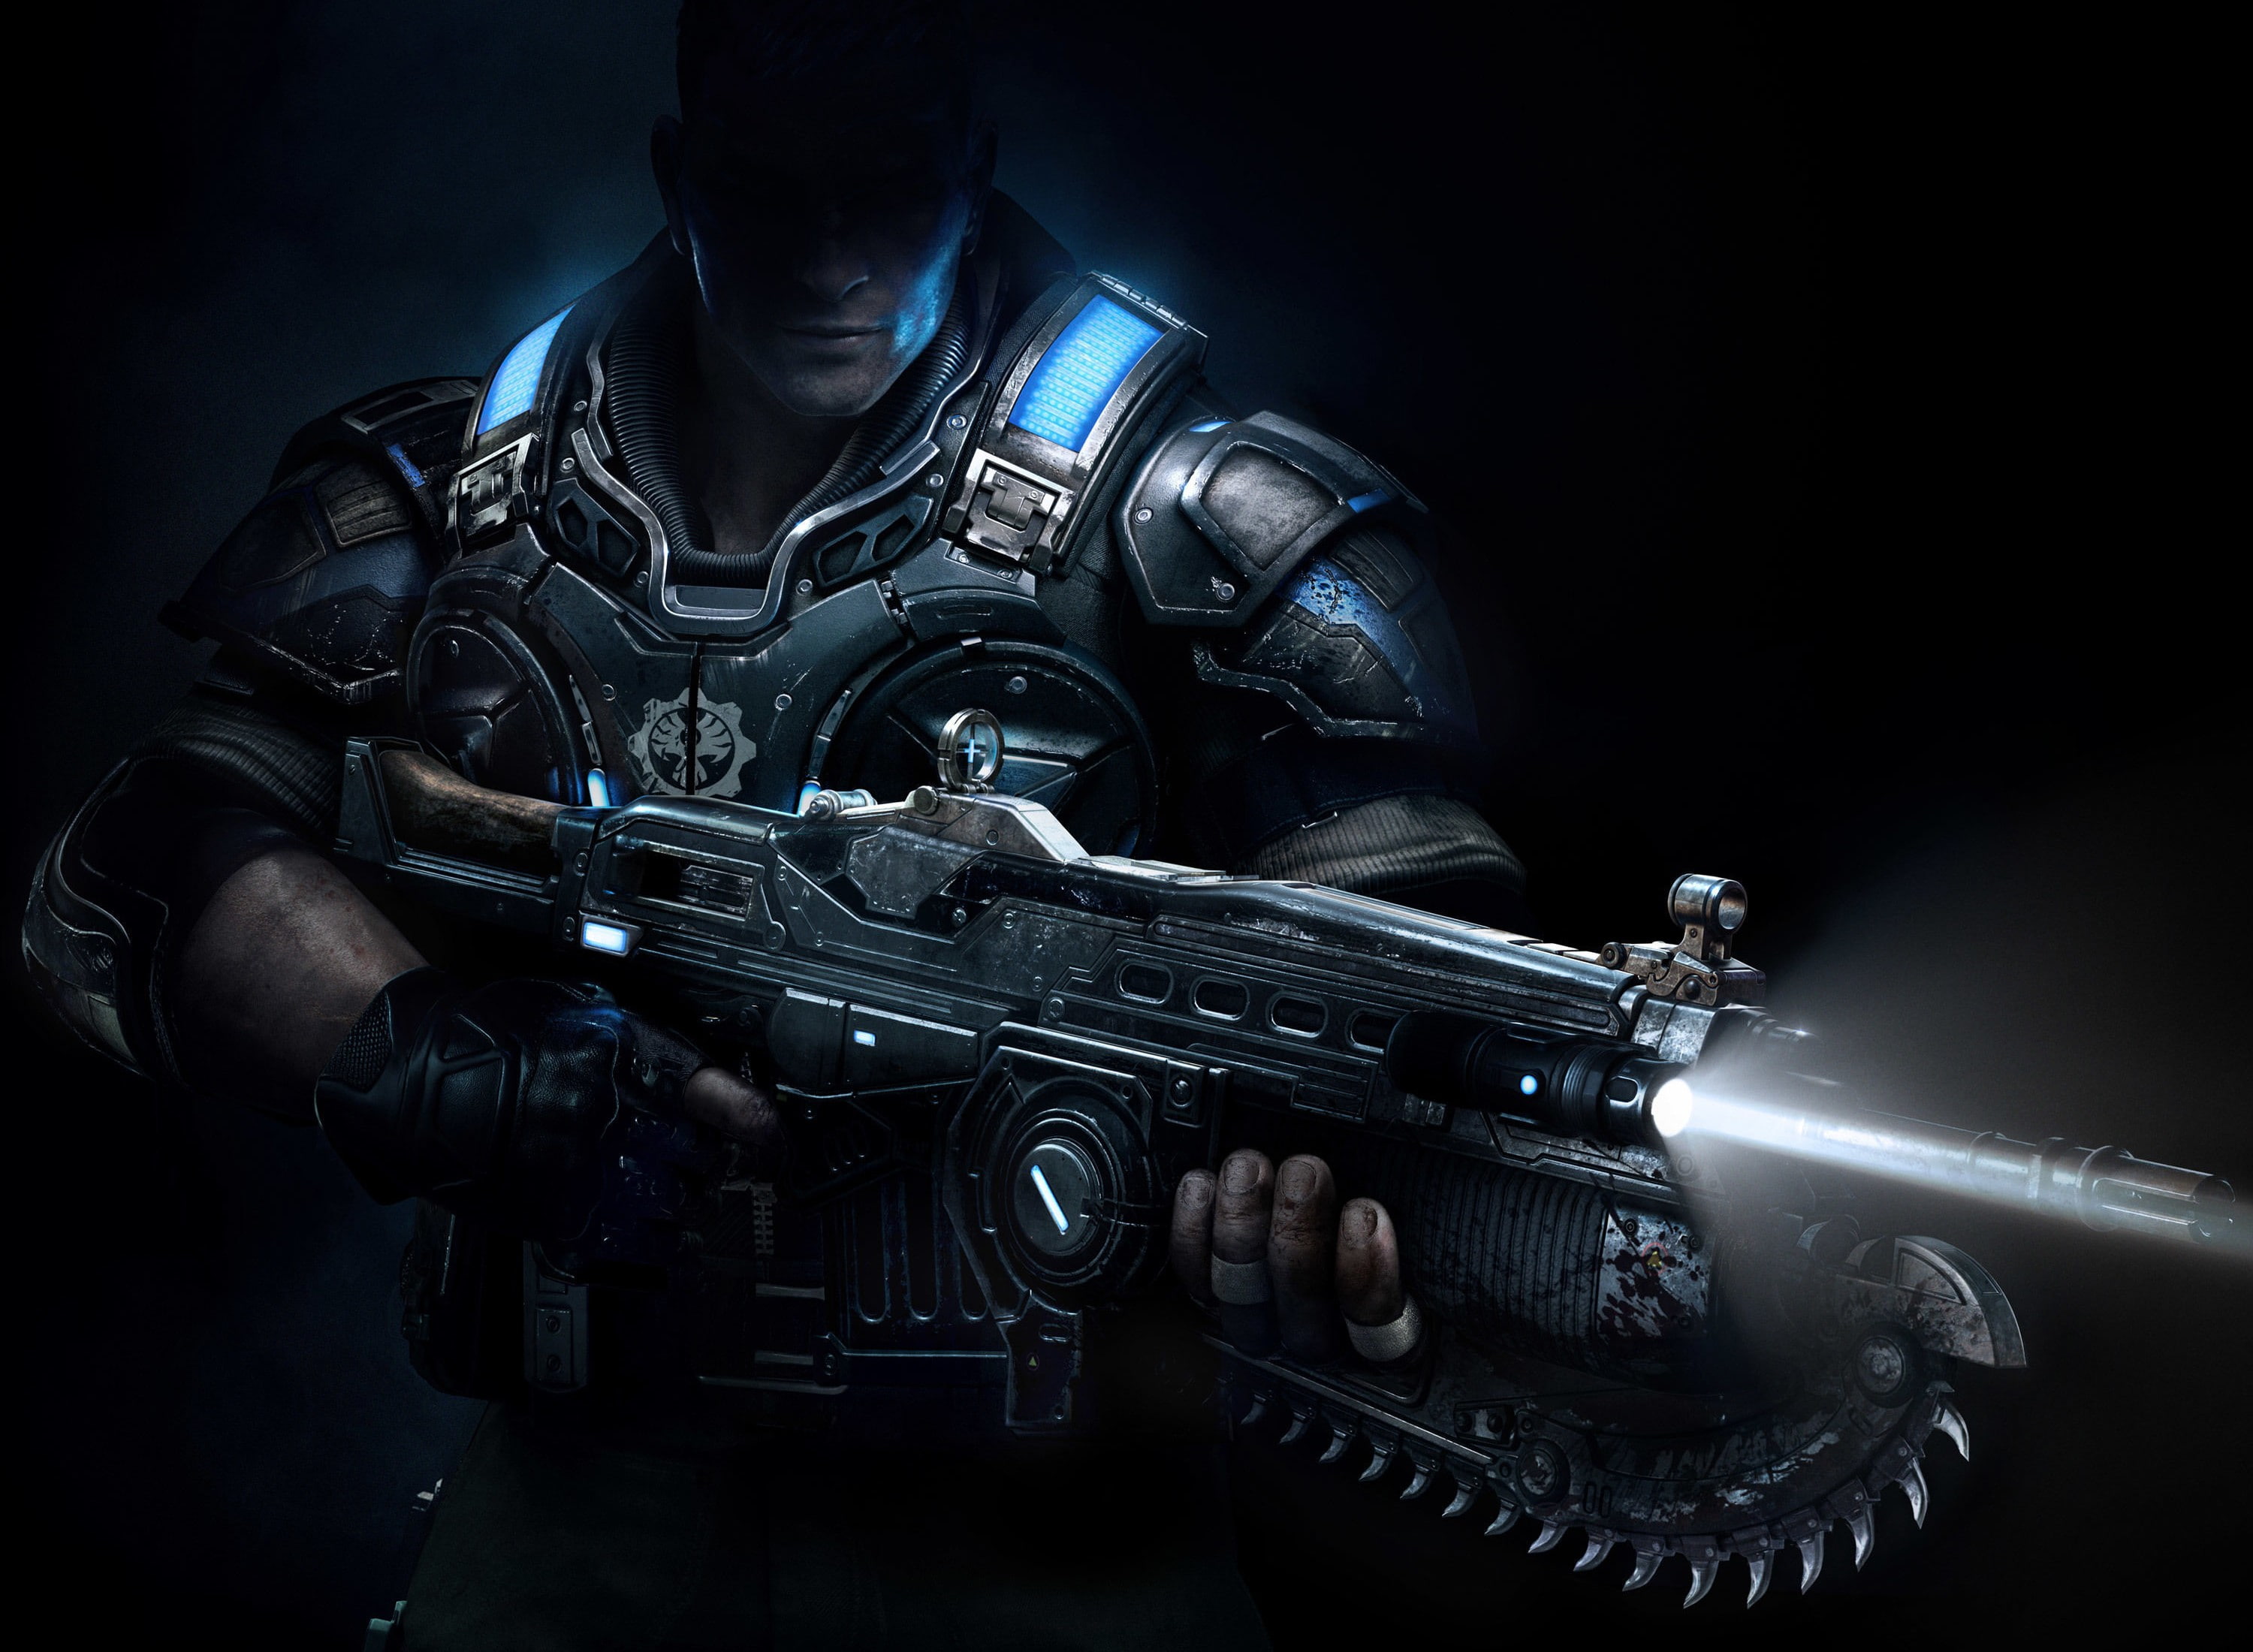 Gears of War, video games, weapon, fantasy weapon, render, Gears of War 4